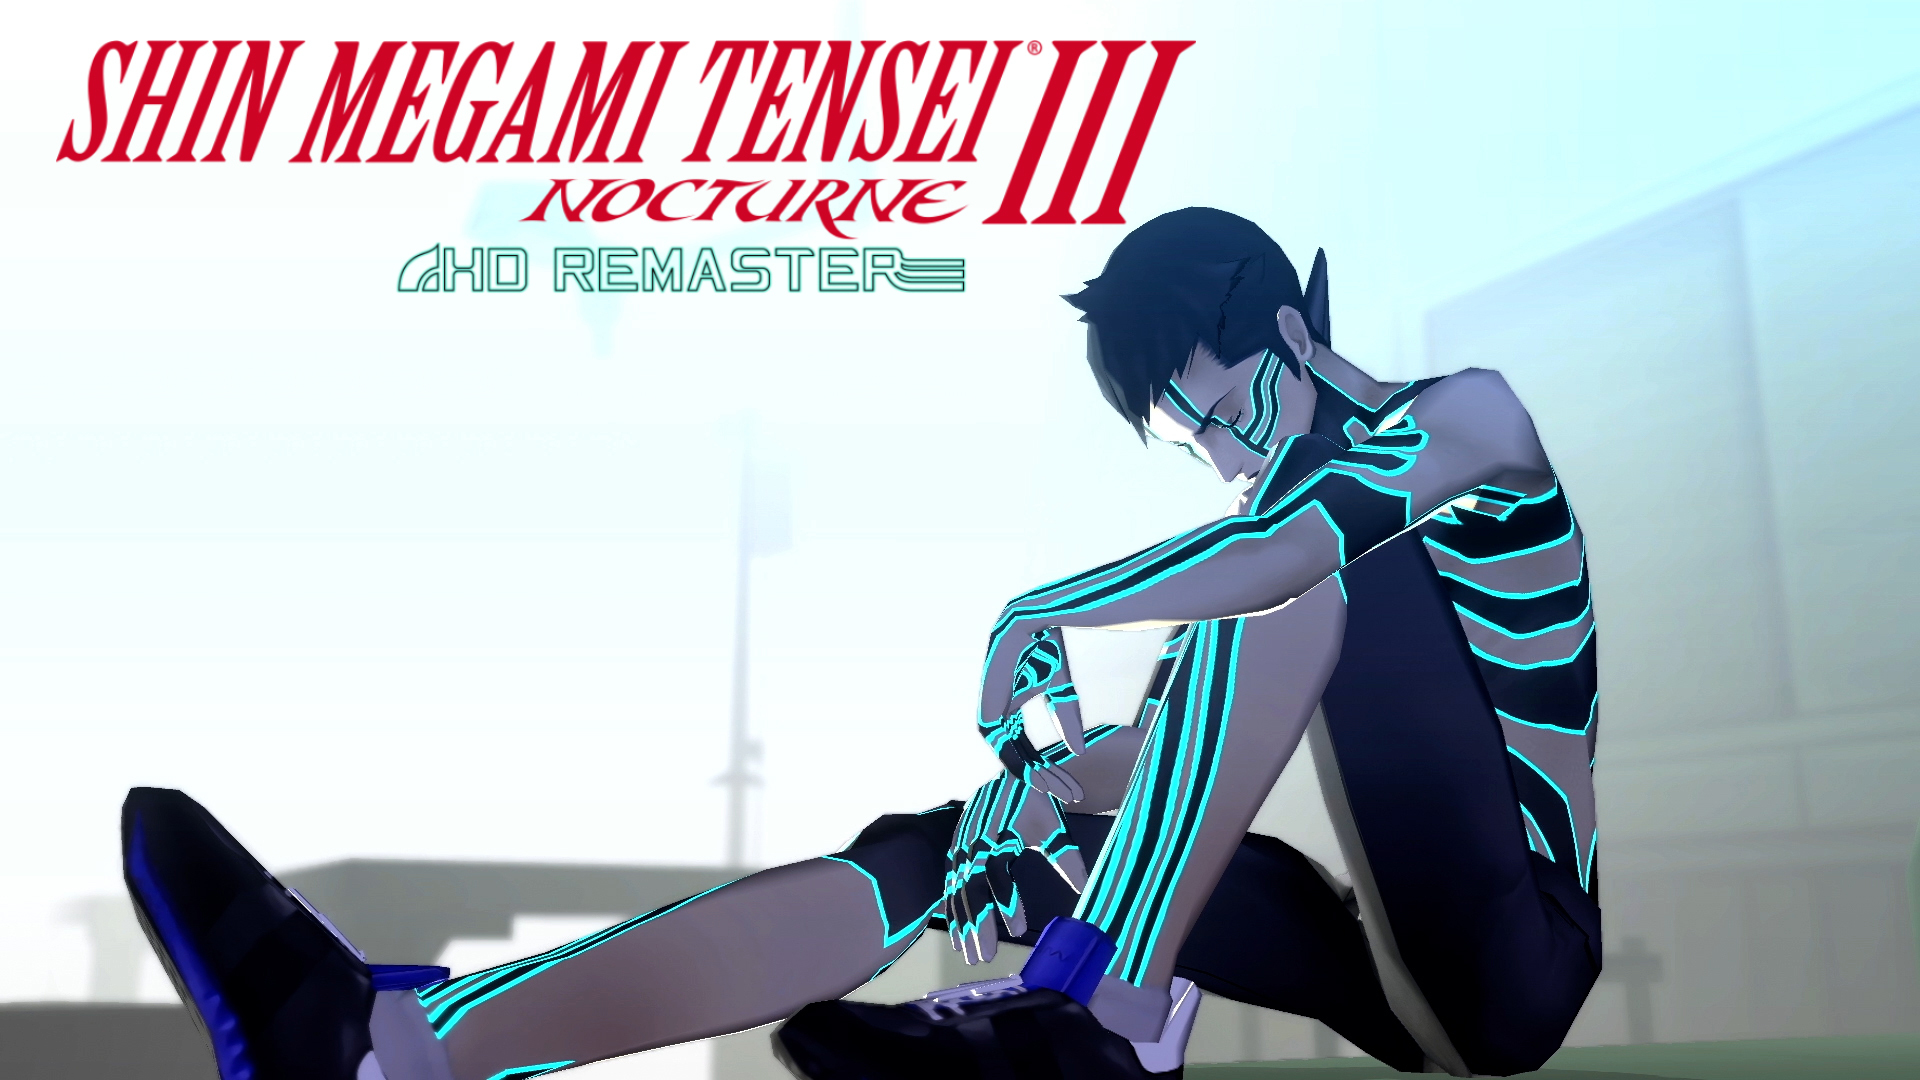 Shun Megami Tensei III Nocturne HD Remasterisé